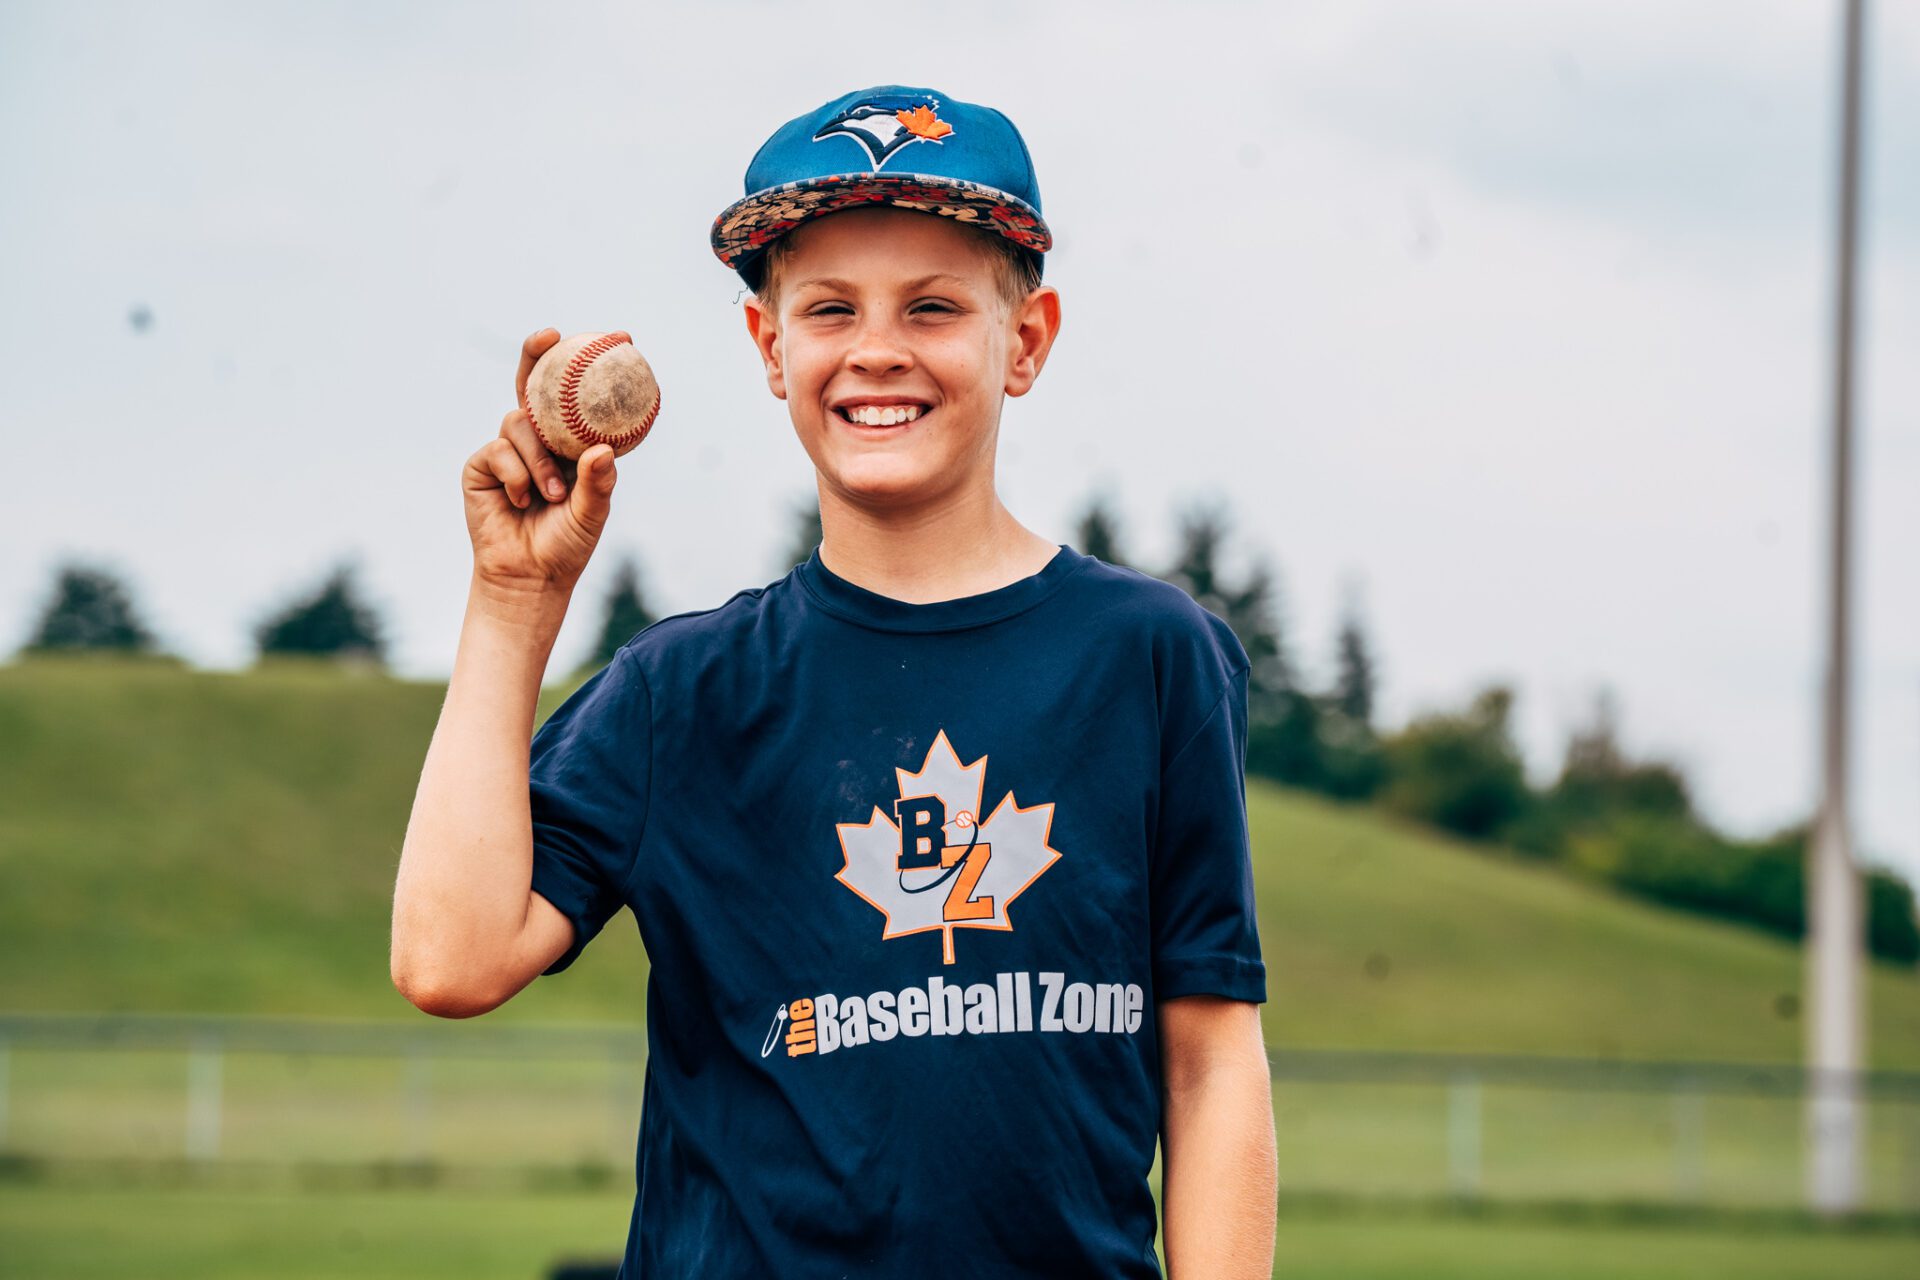 The-Baseball-Zone-kid-catches-the-baseball